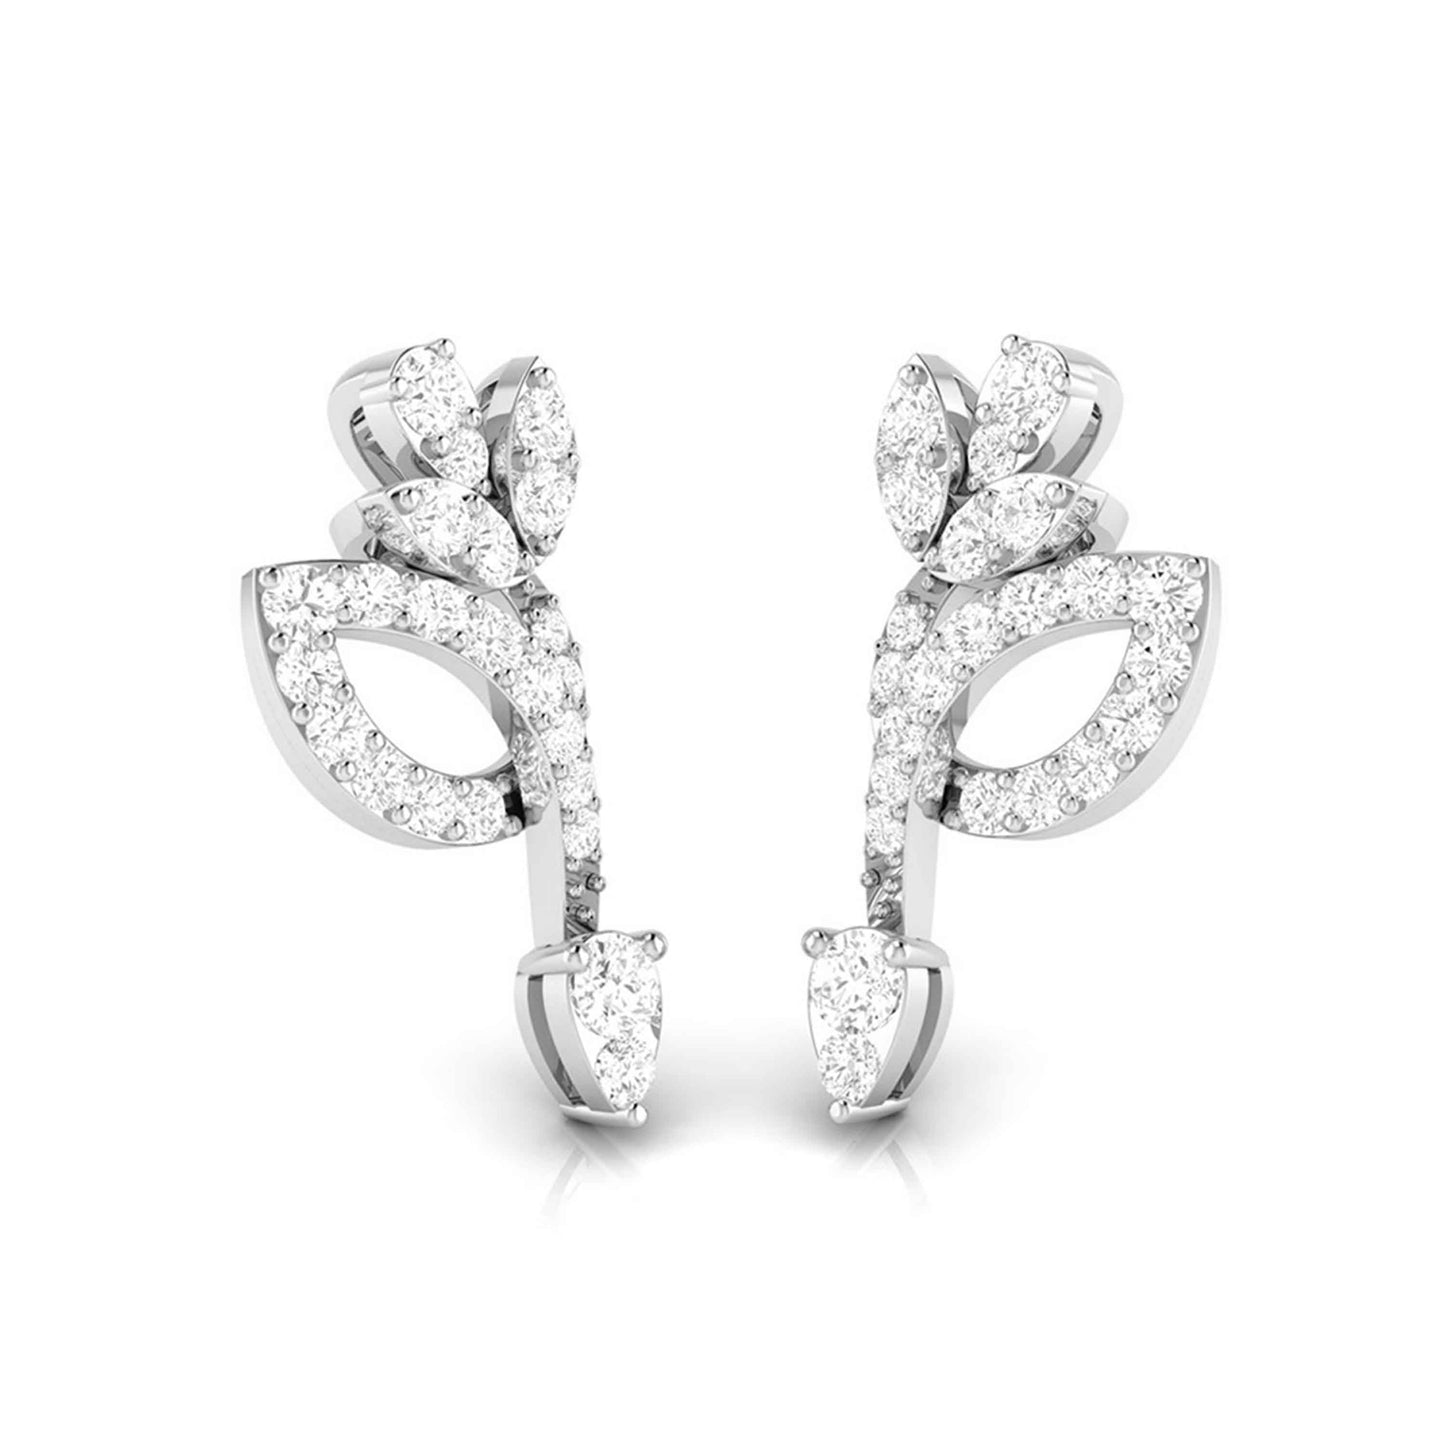 Small earrings design Anomalous Lab Grown Diamond Earrings Fiona Diamonds